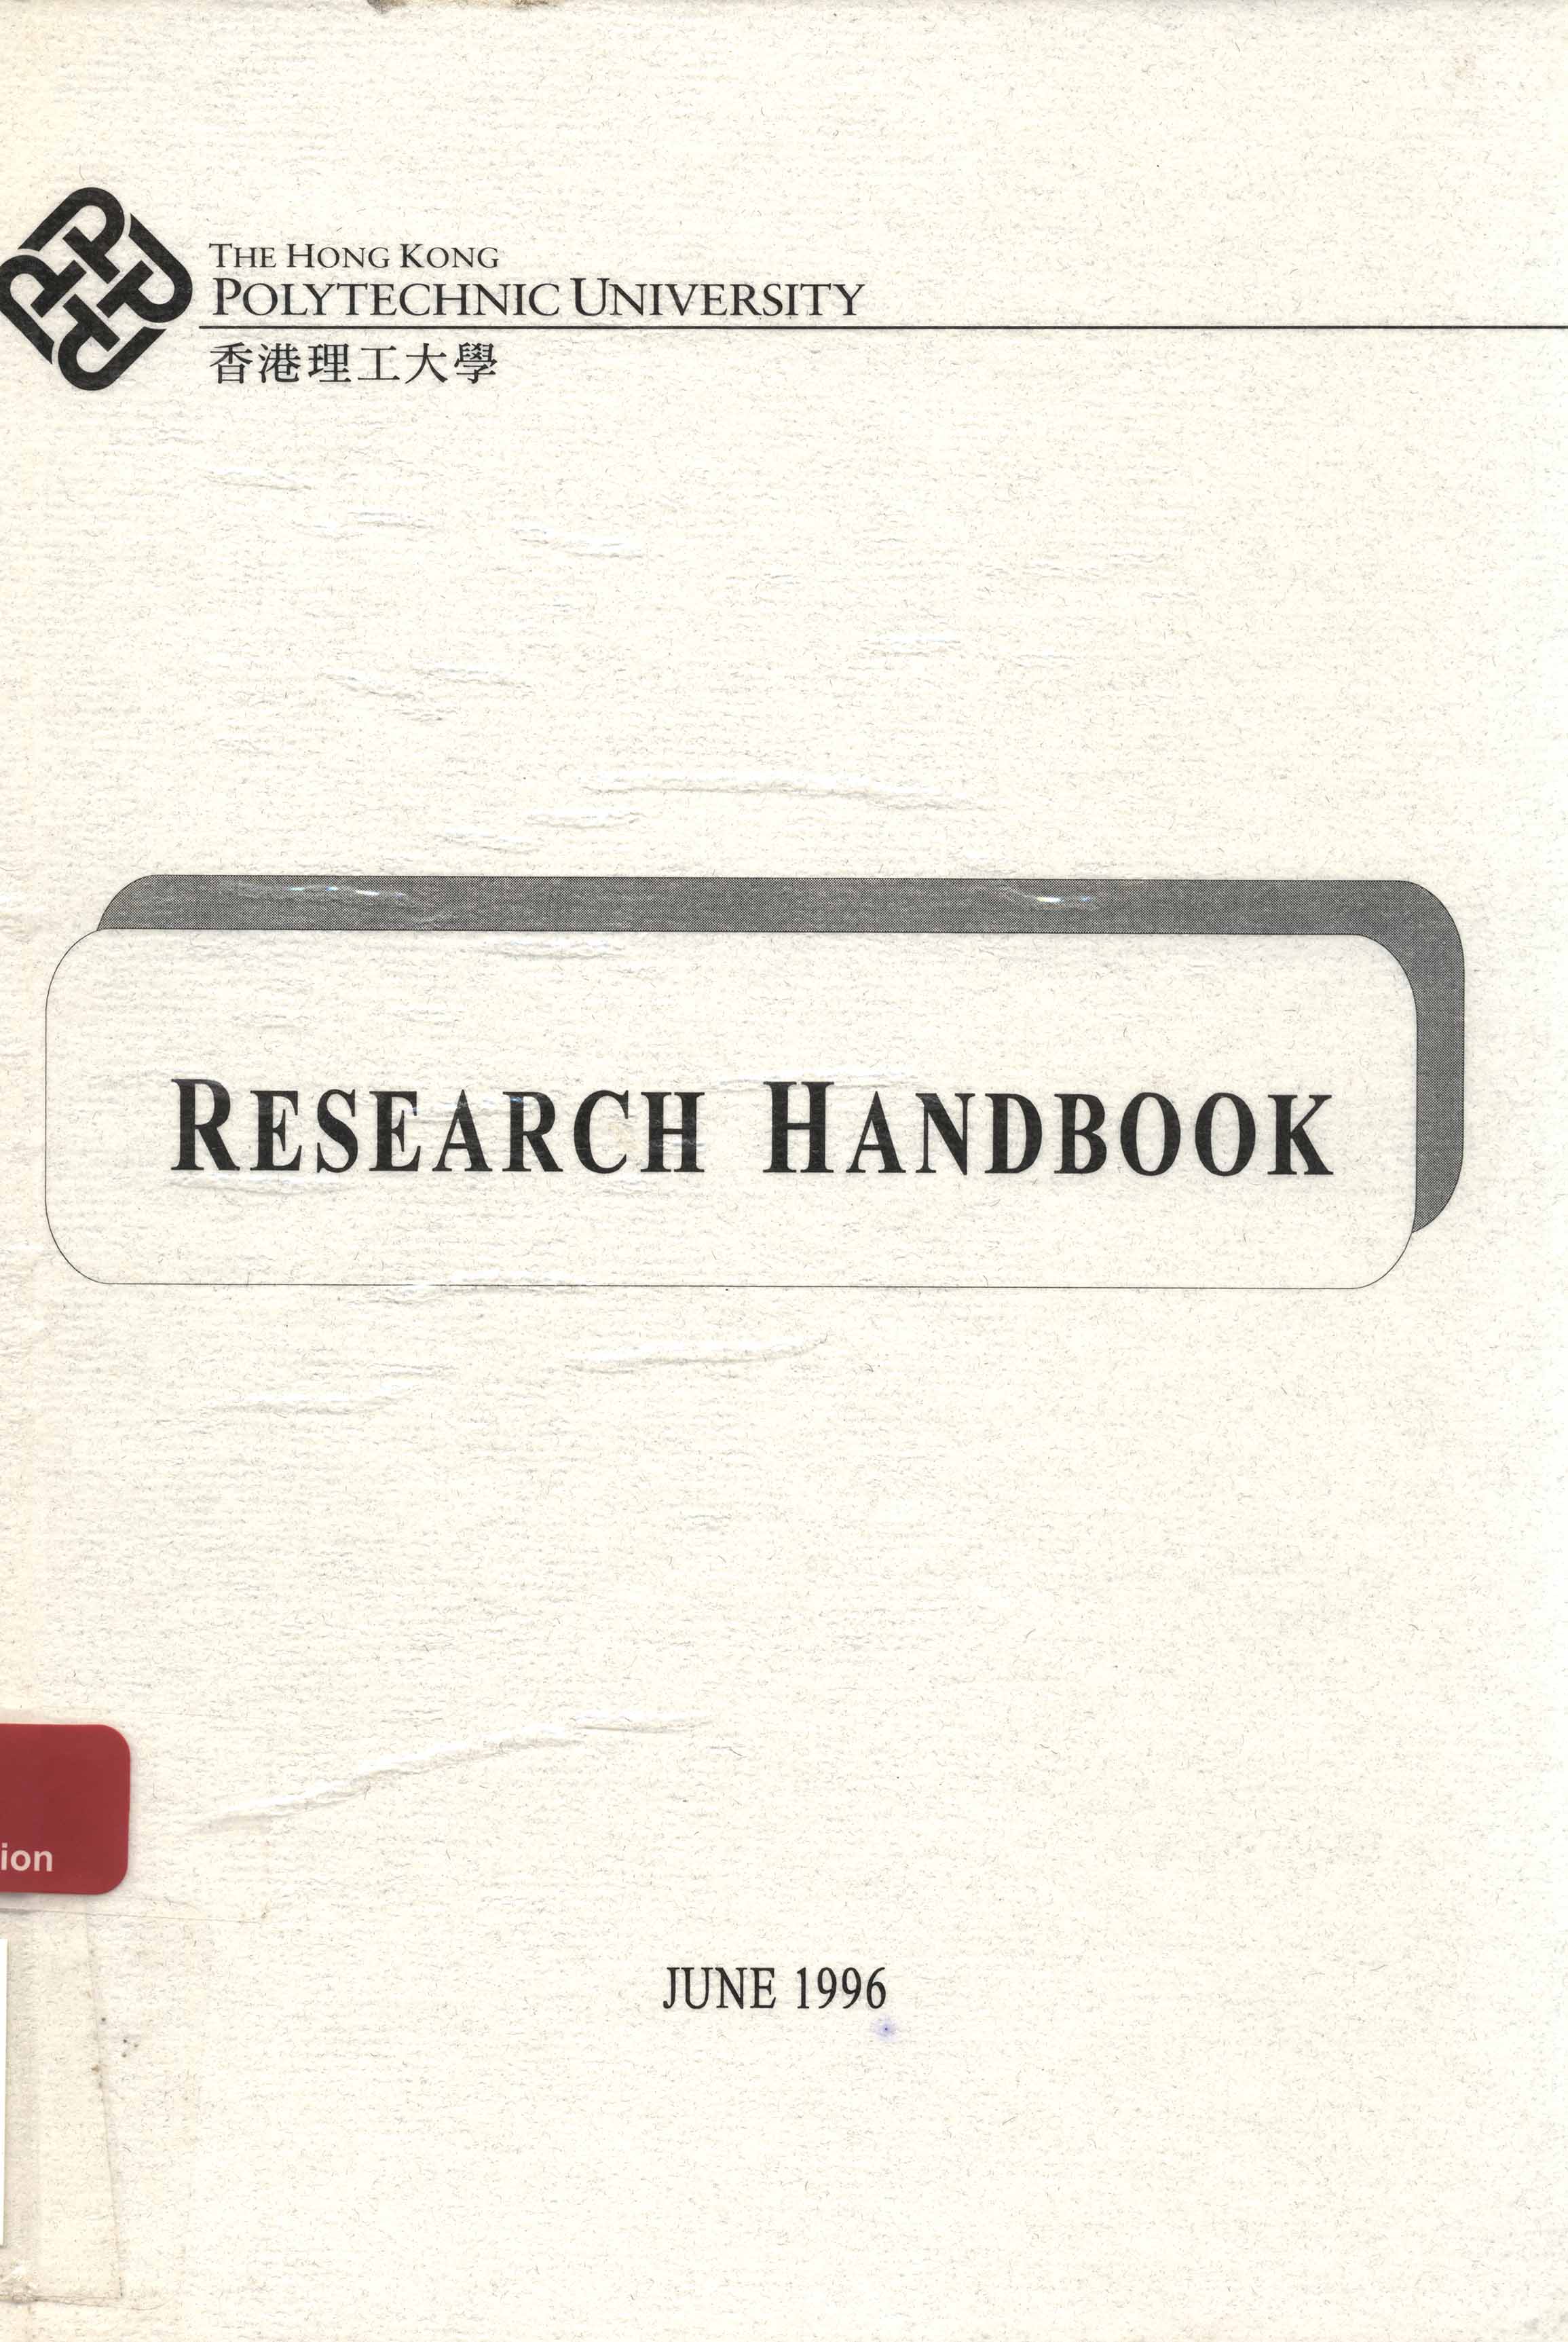 Research handbook 